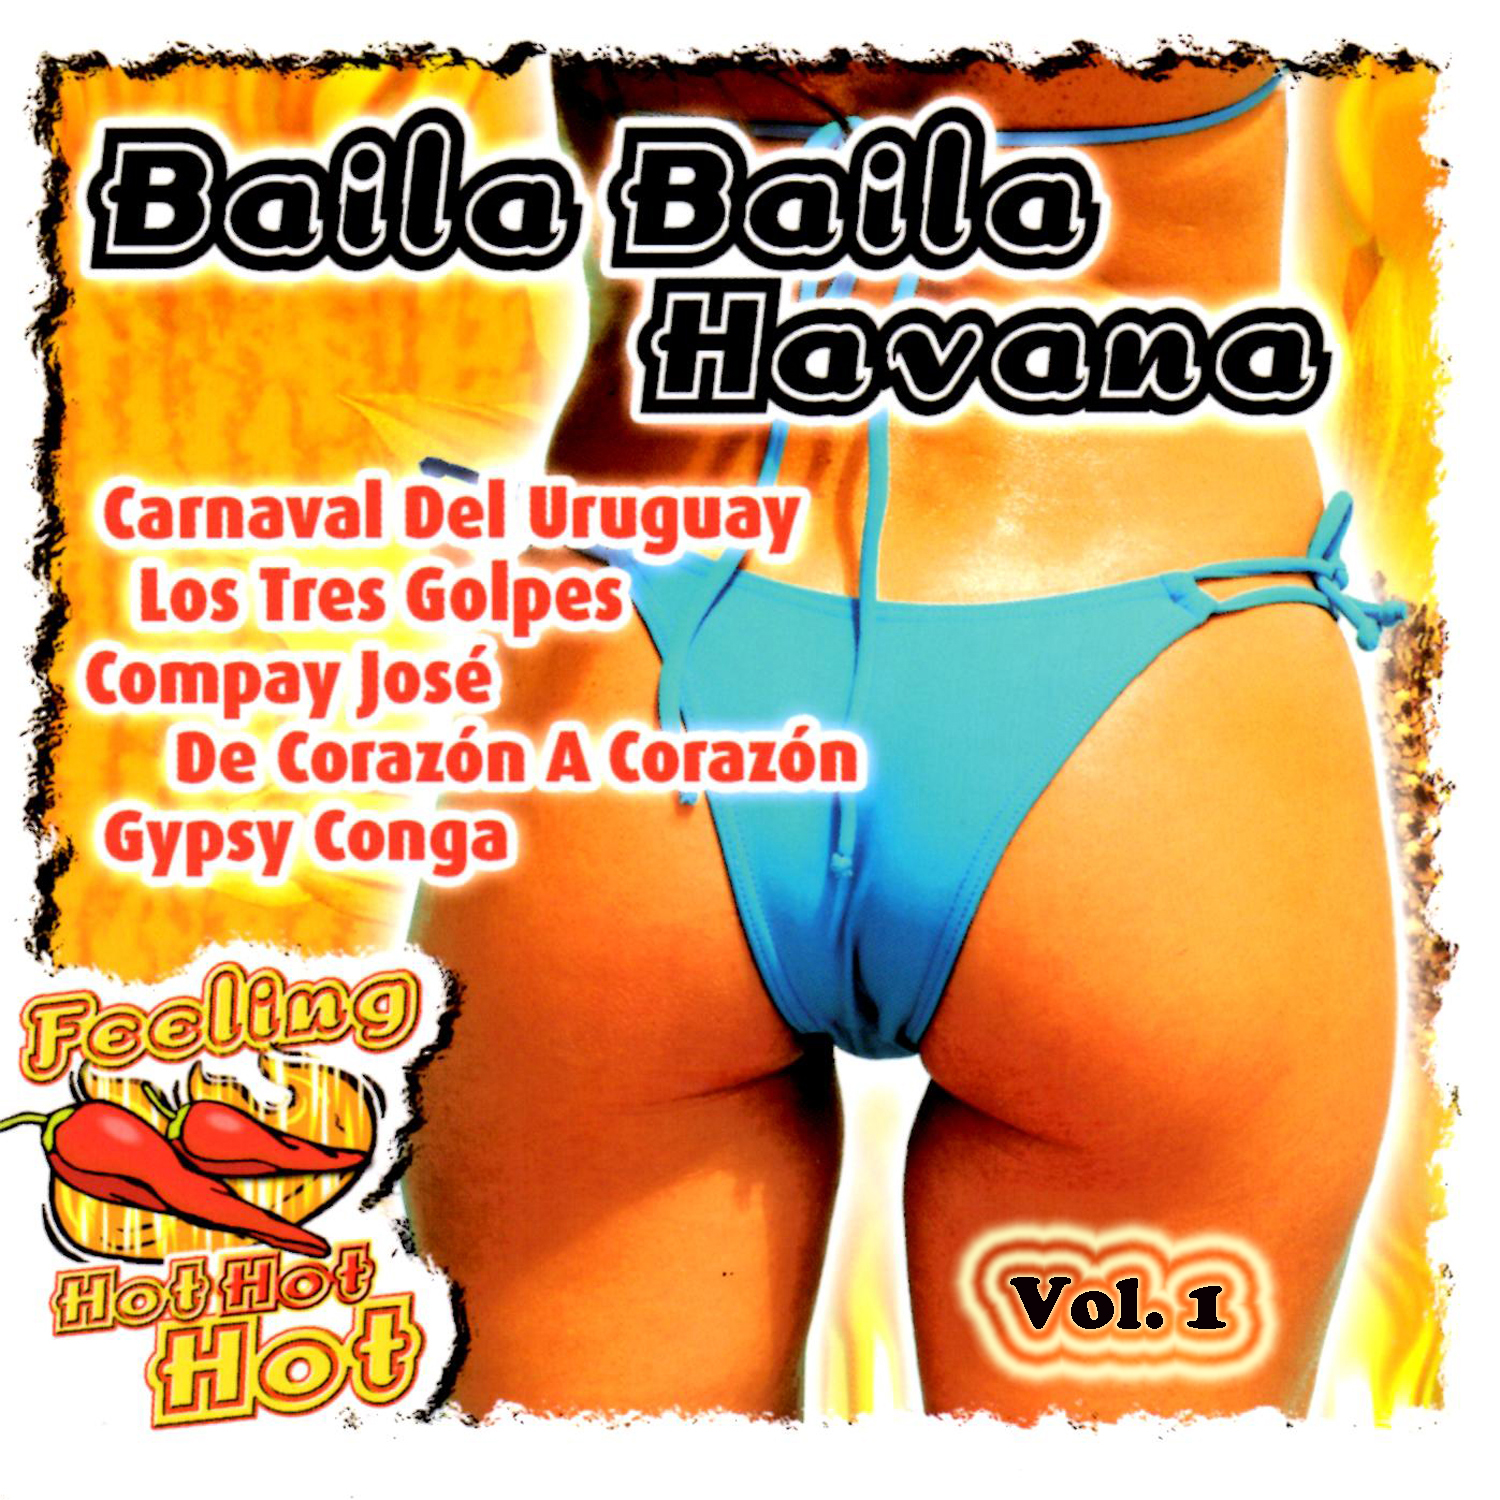 Baila baila Havana, Vol. 1